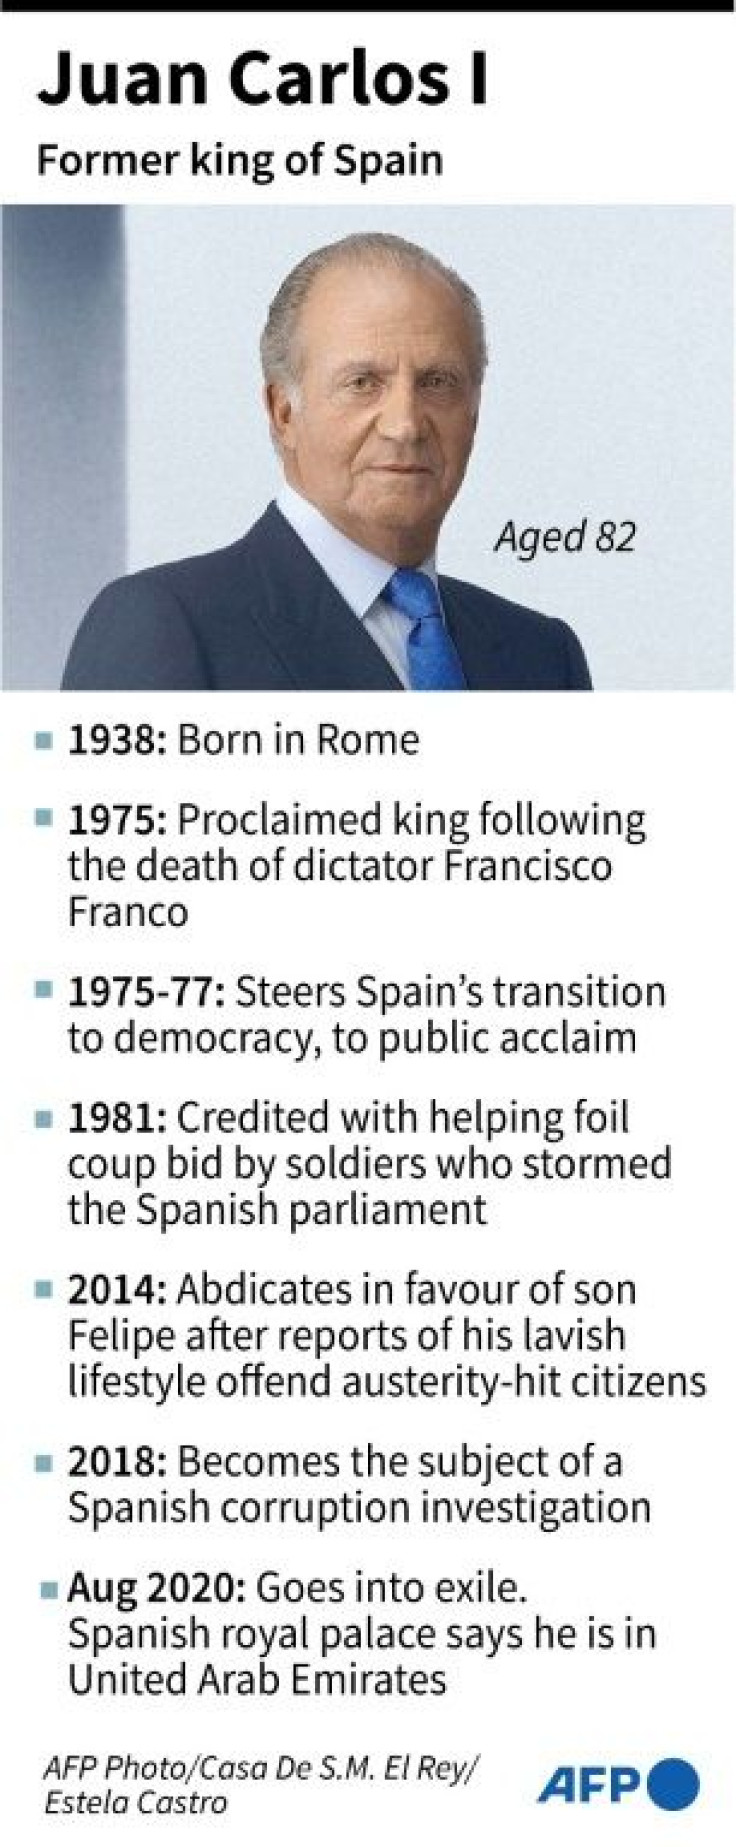 Profile of Spain's former king, Juan Carlos 1